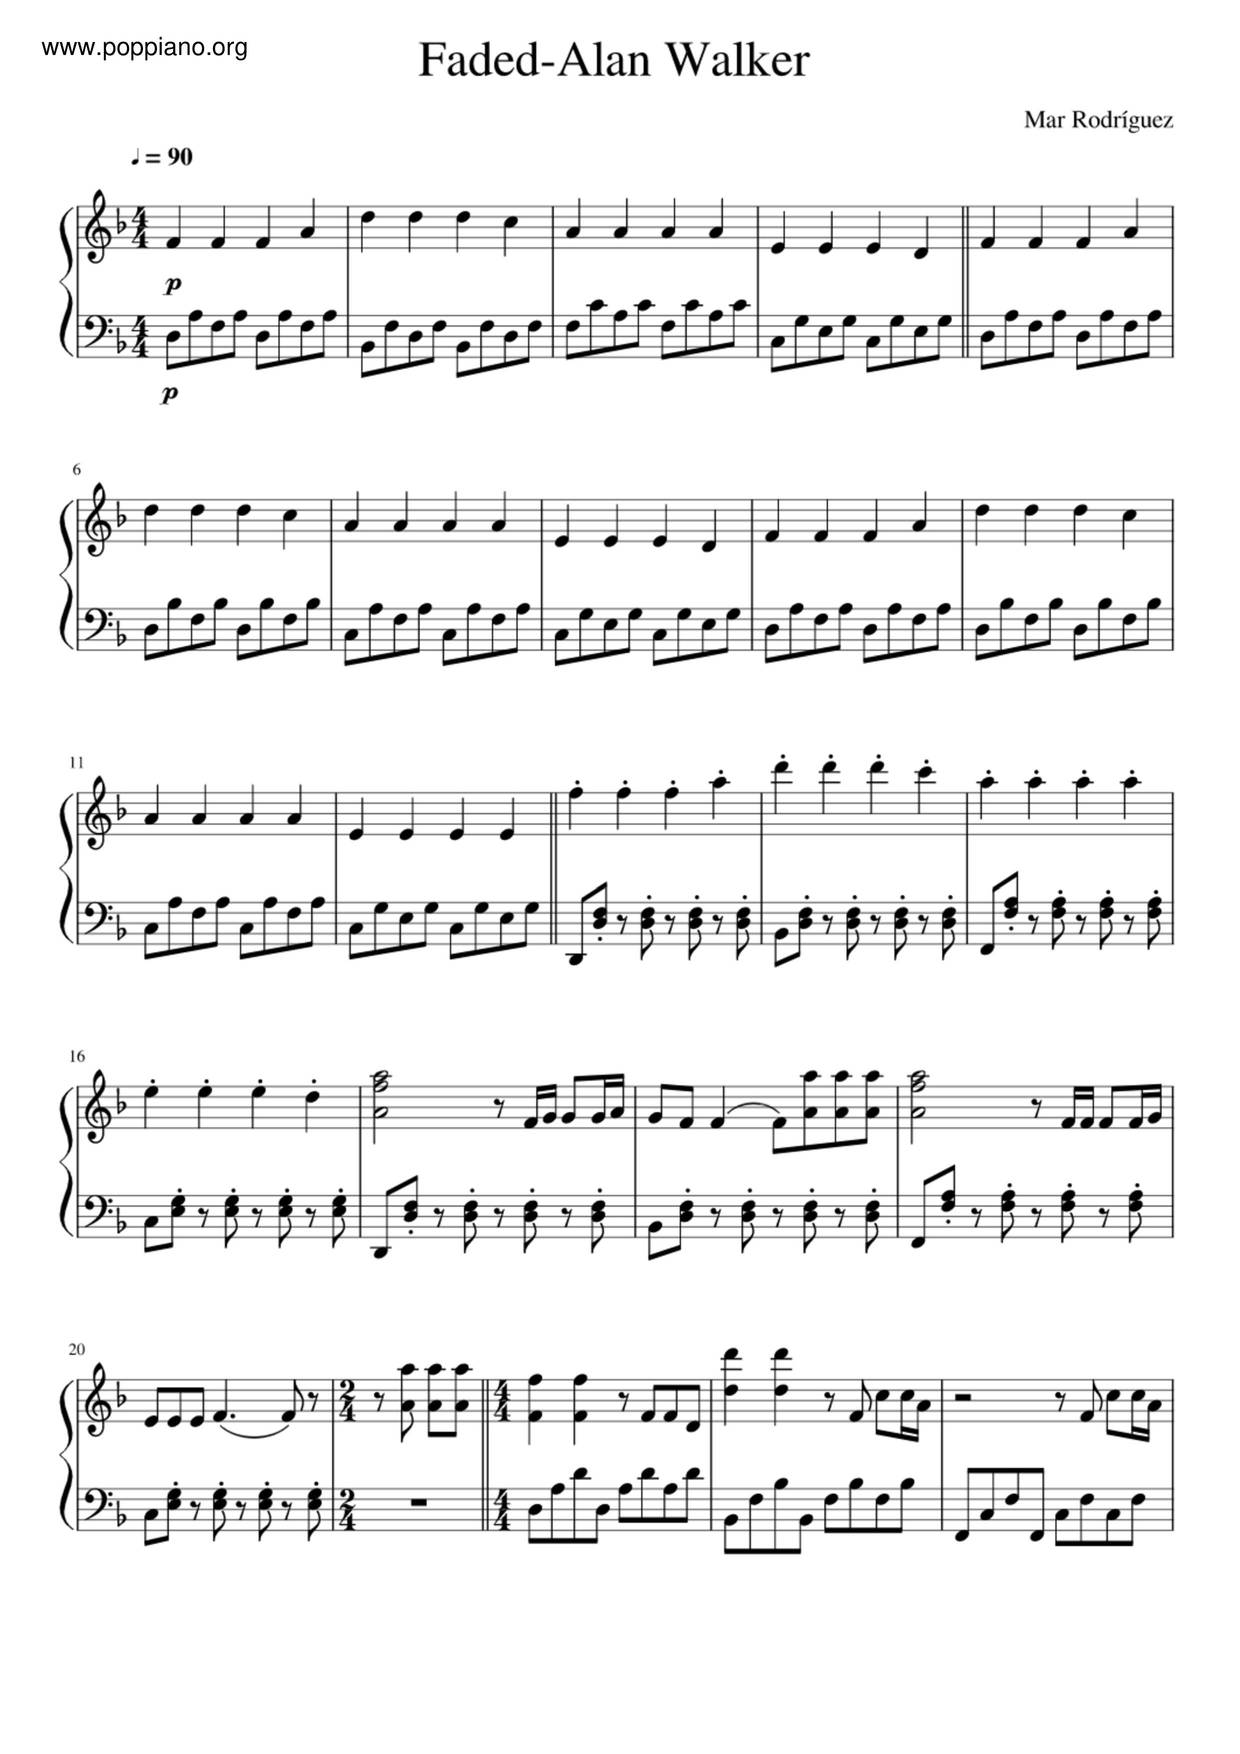 Fadedall Versions Sheet Music Piano Score Free Pdf Download Hk Pop Piano Academy